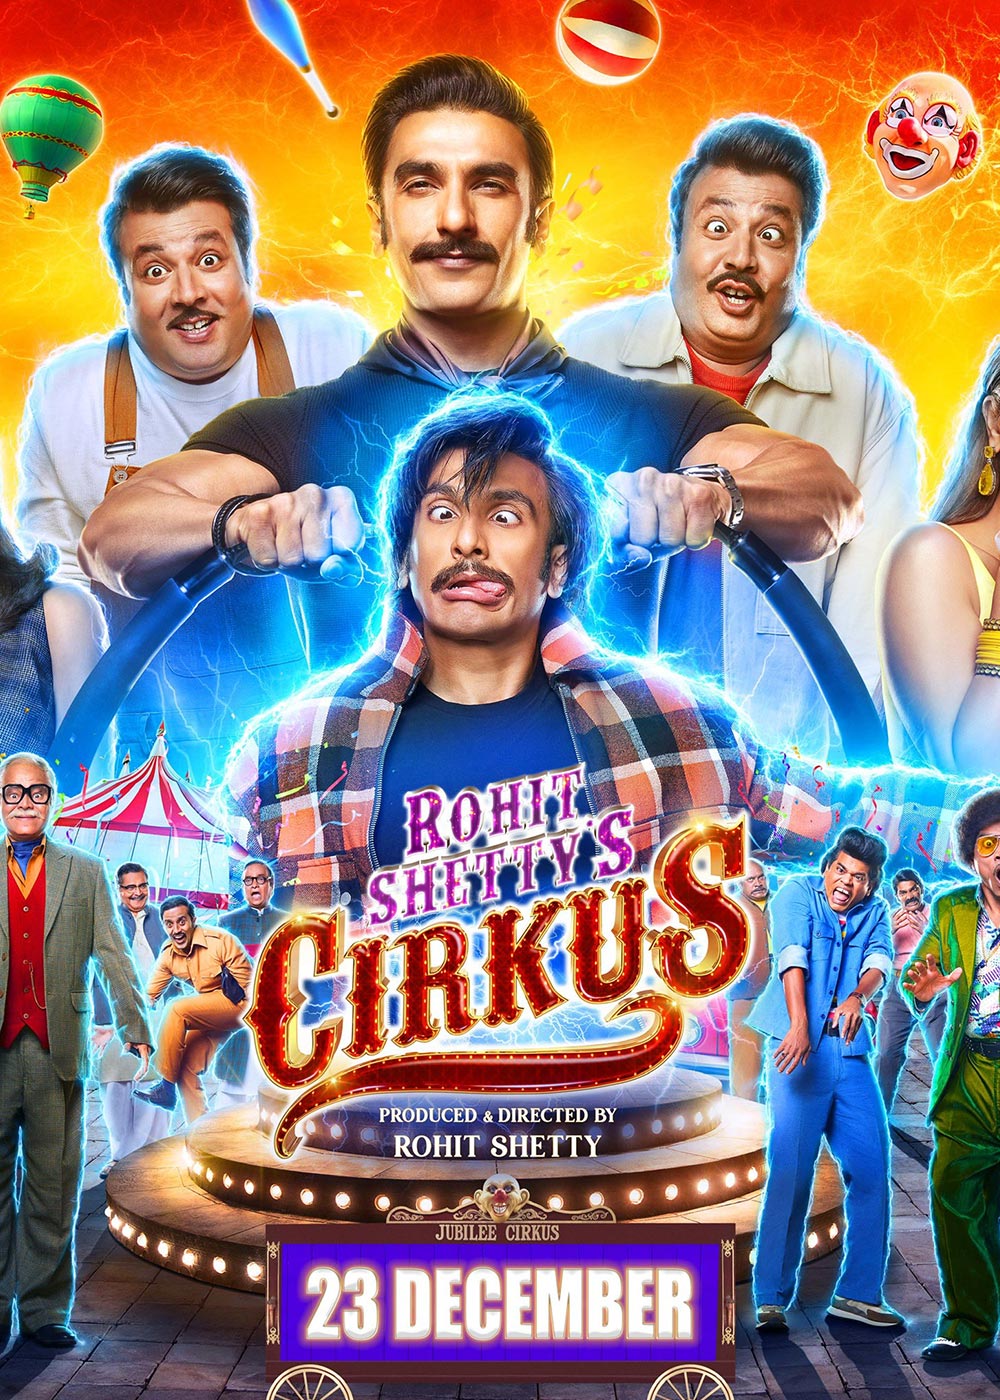 cirkus movie review